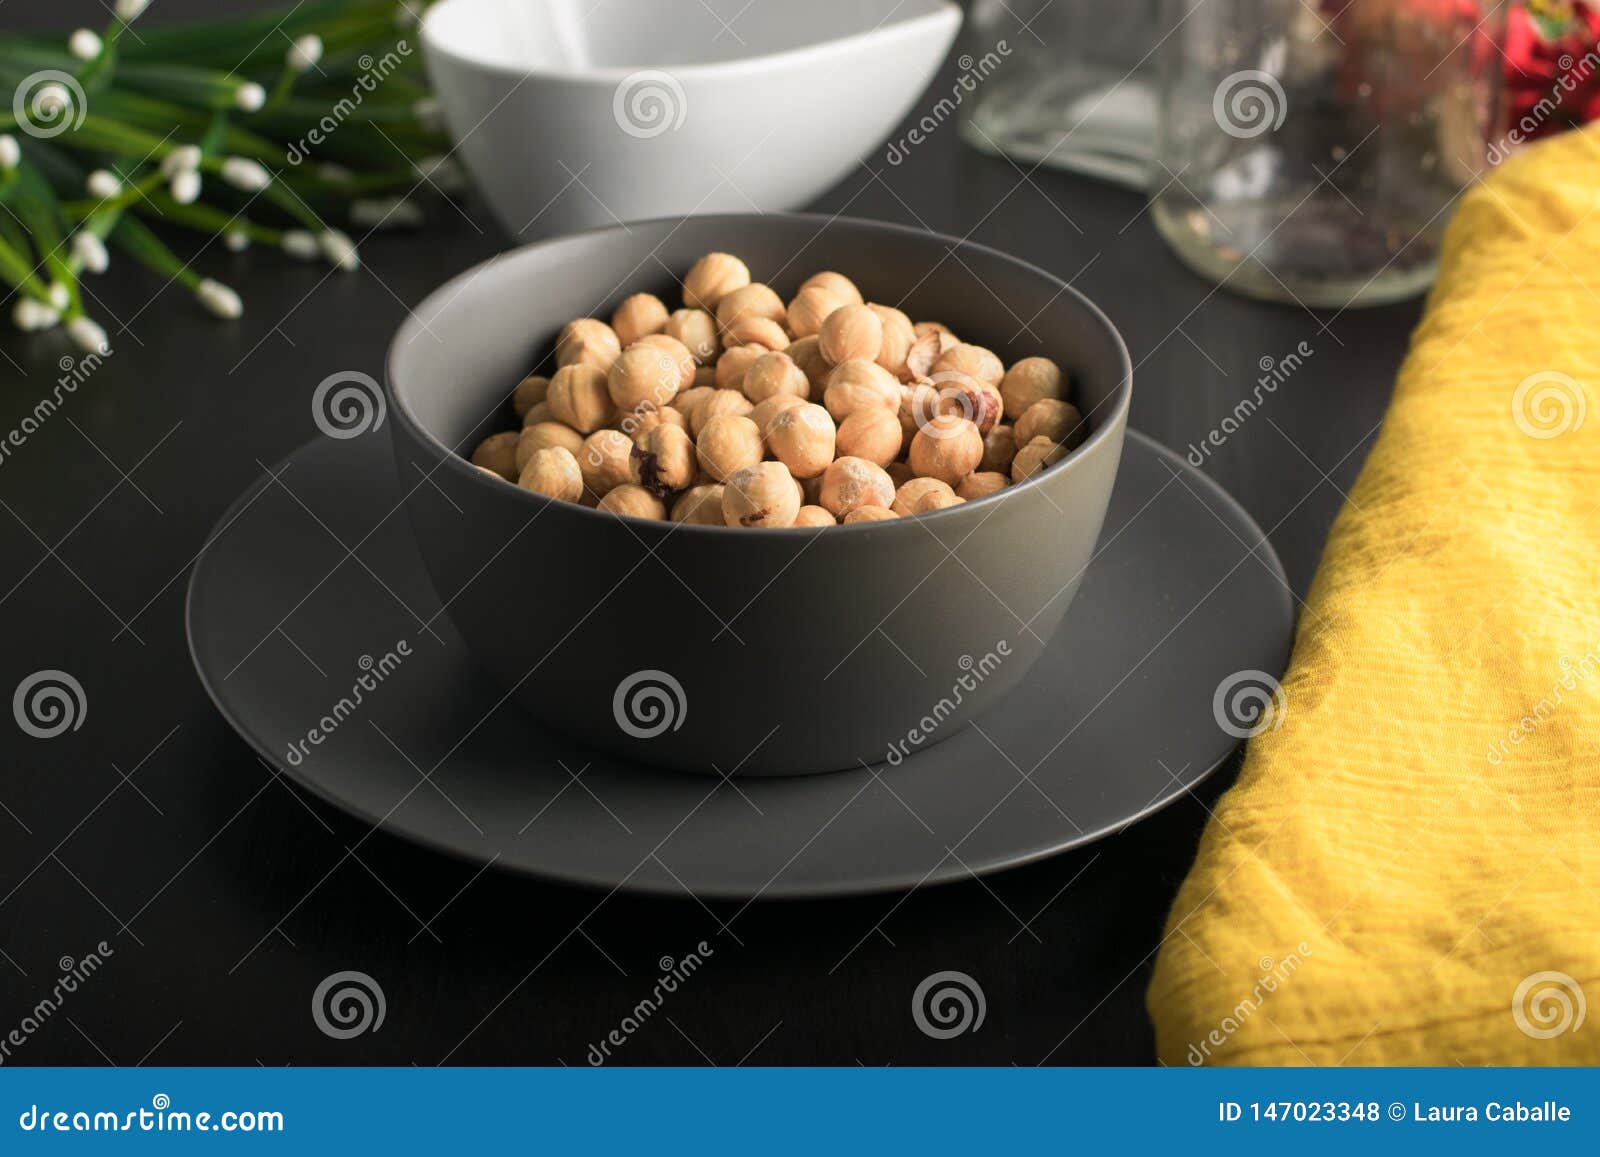 gray bowl with  hazelnuts